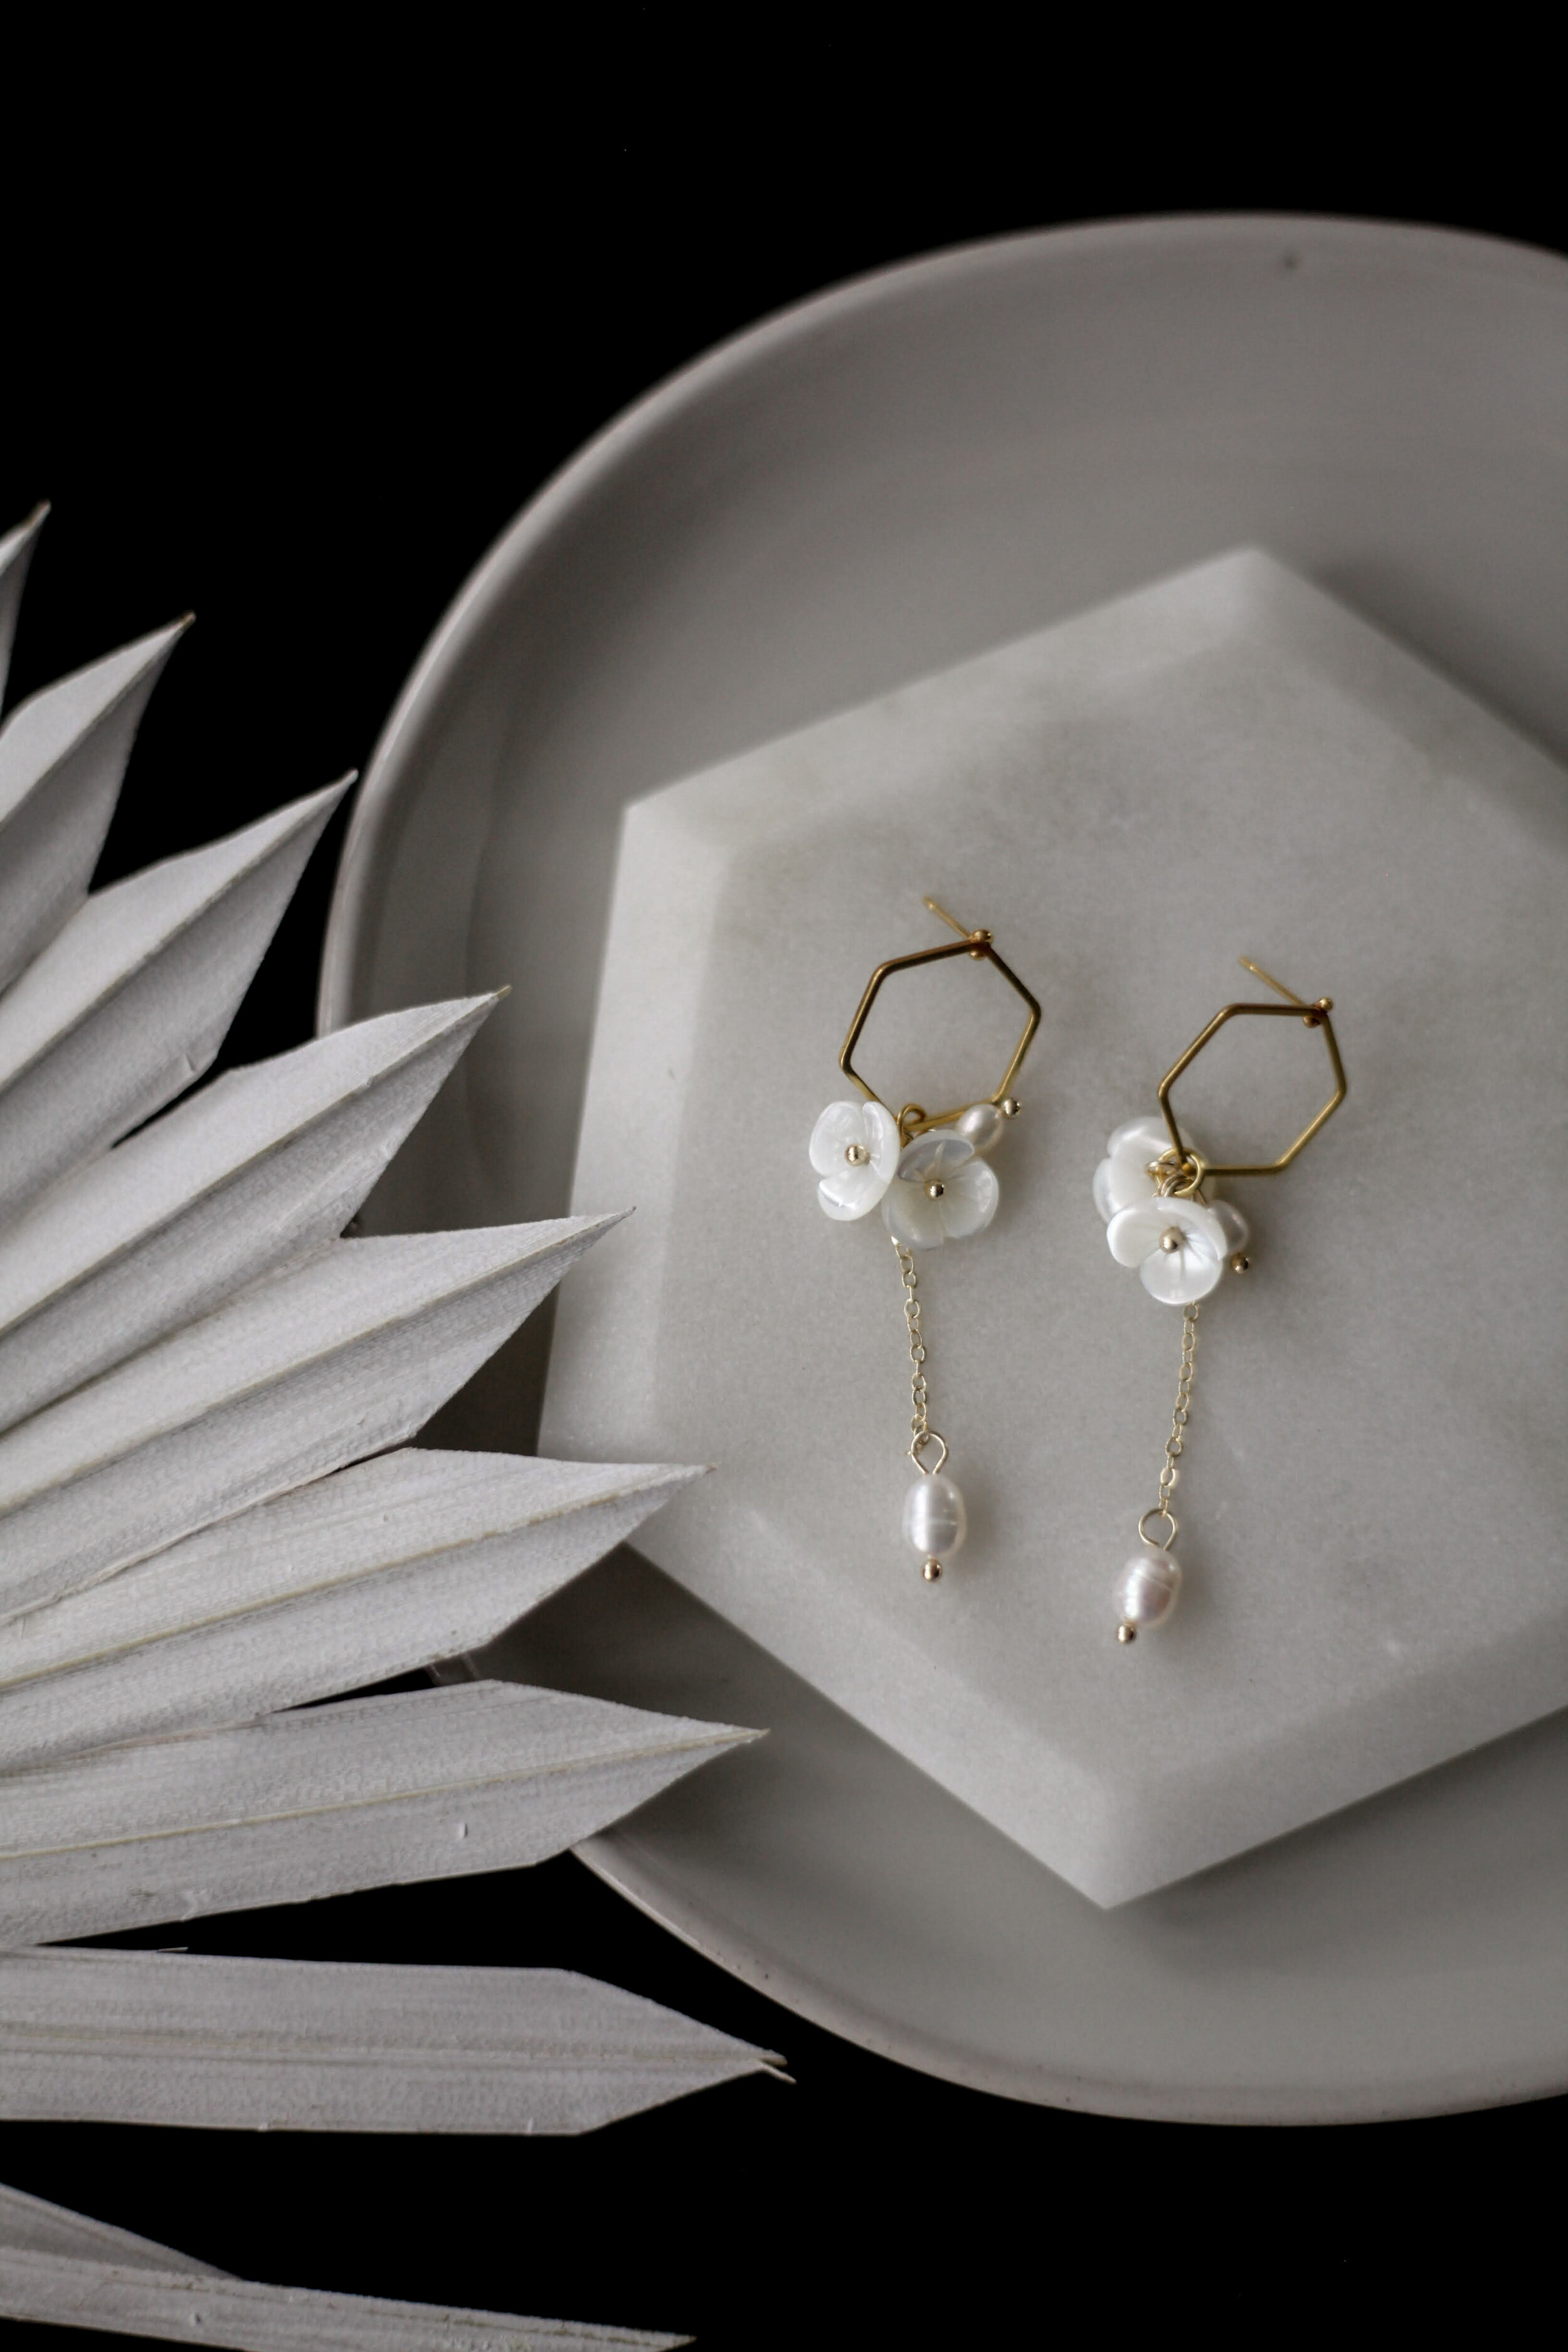 mav earrings by poppy lane — $49